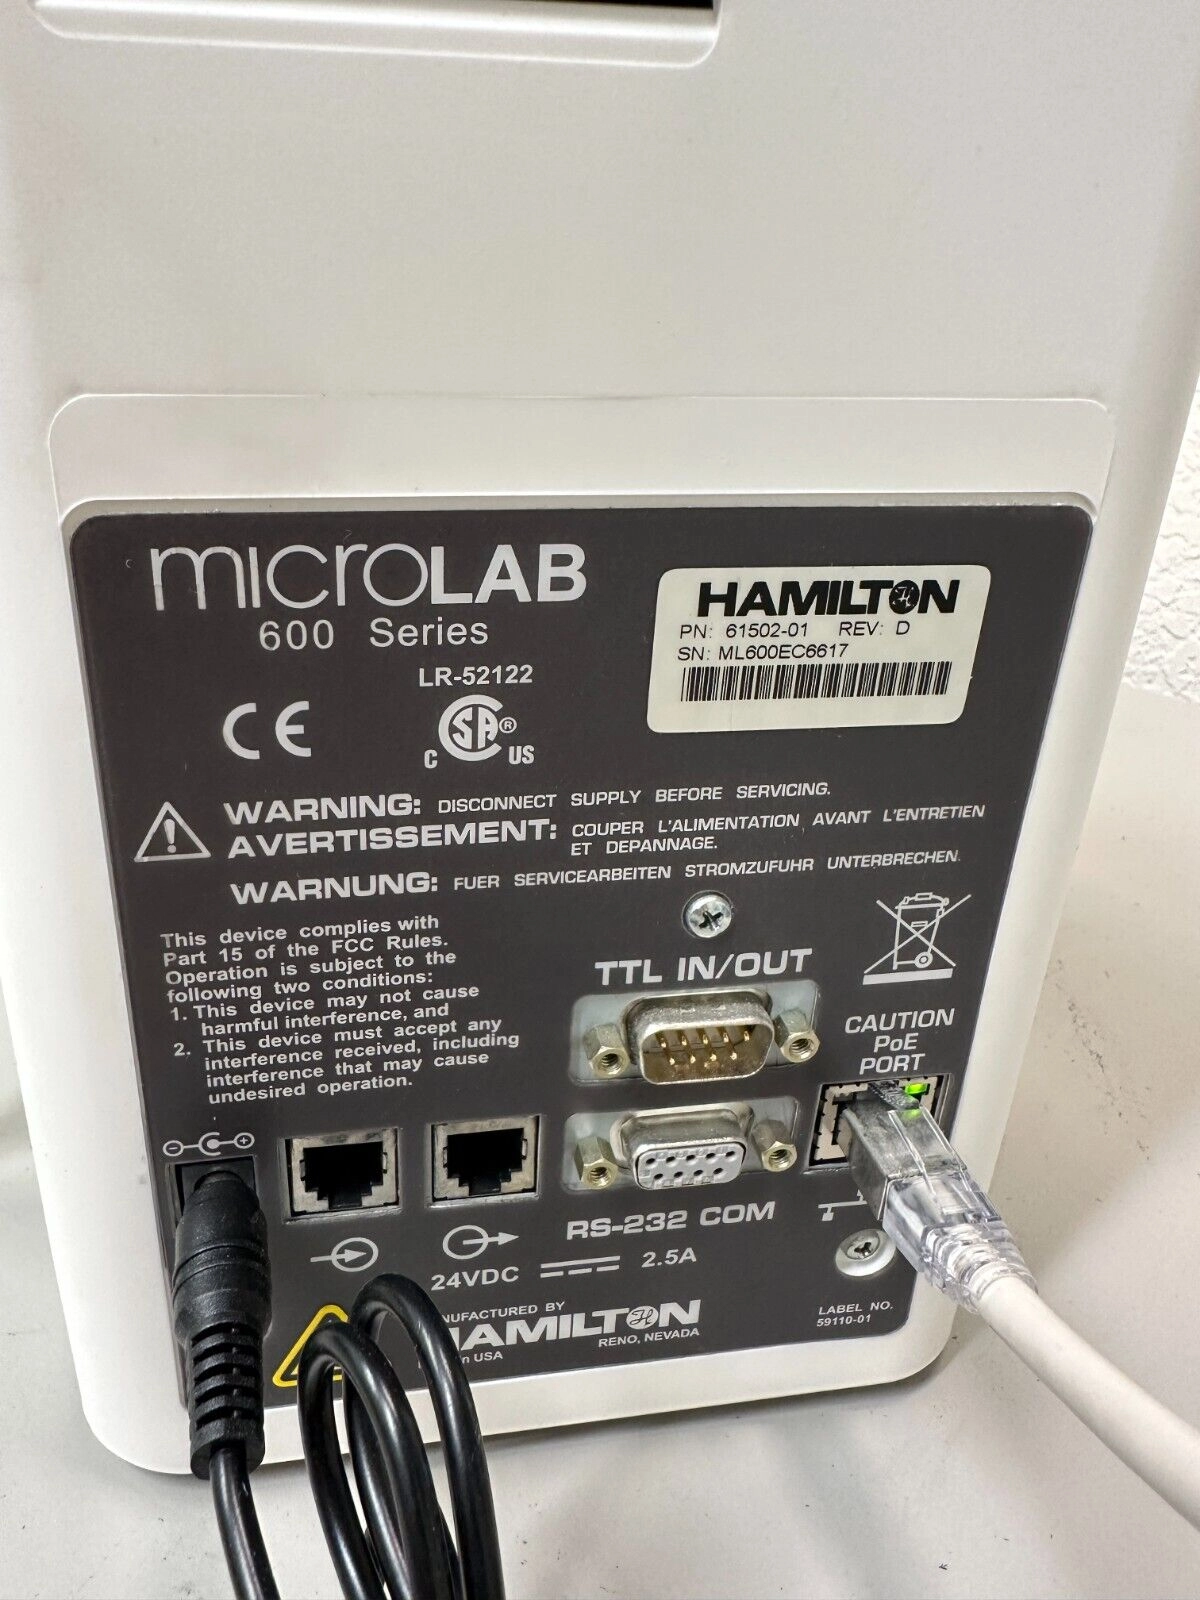 Microlab 600 controller